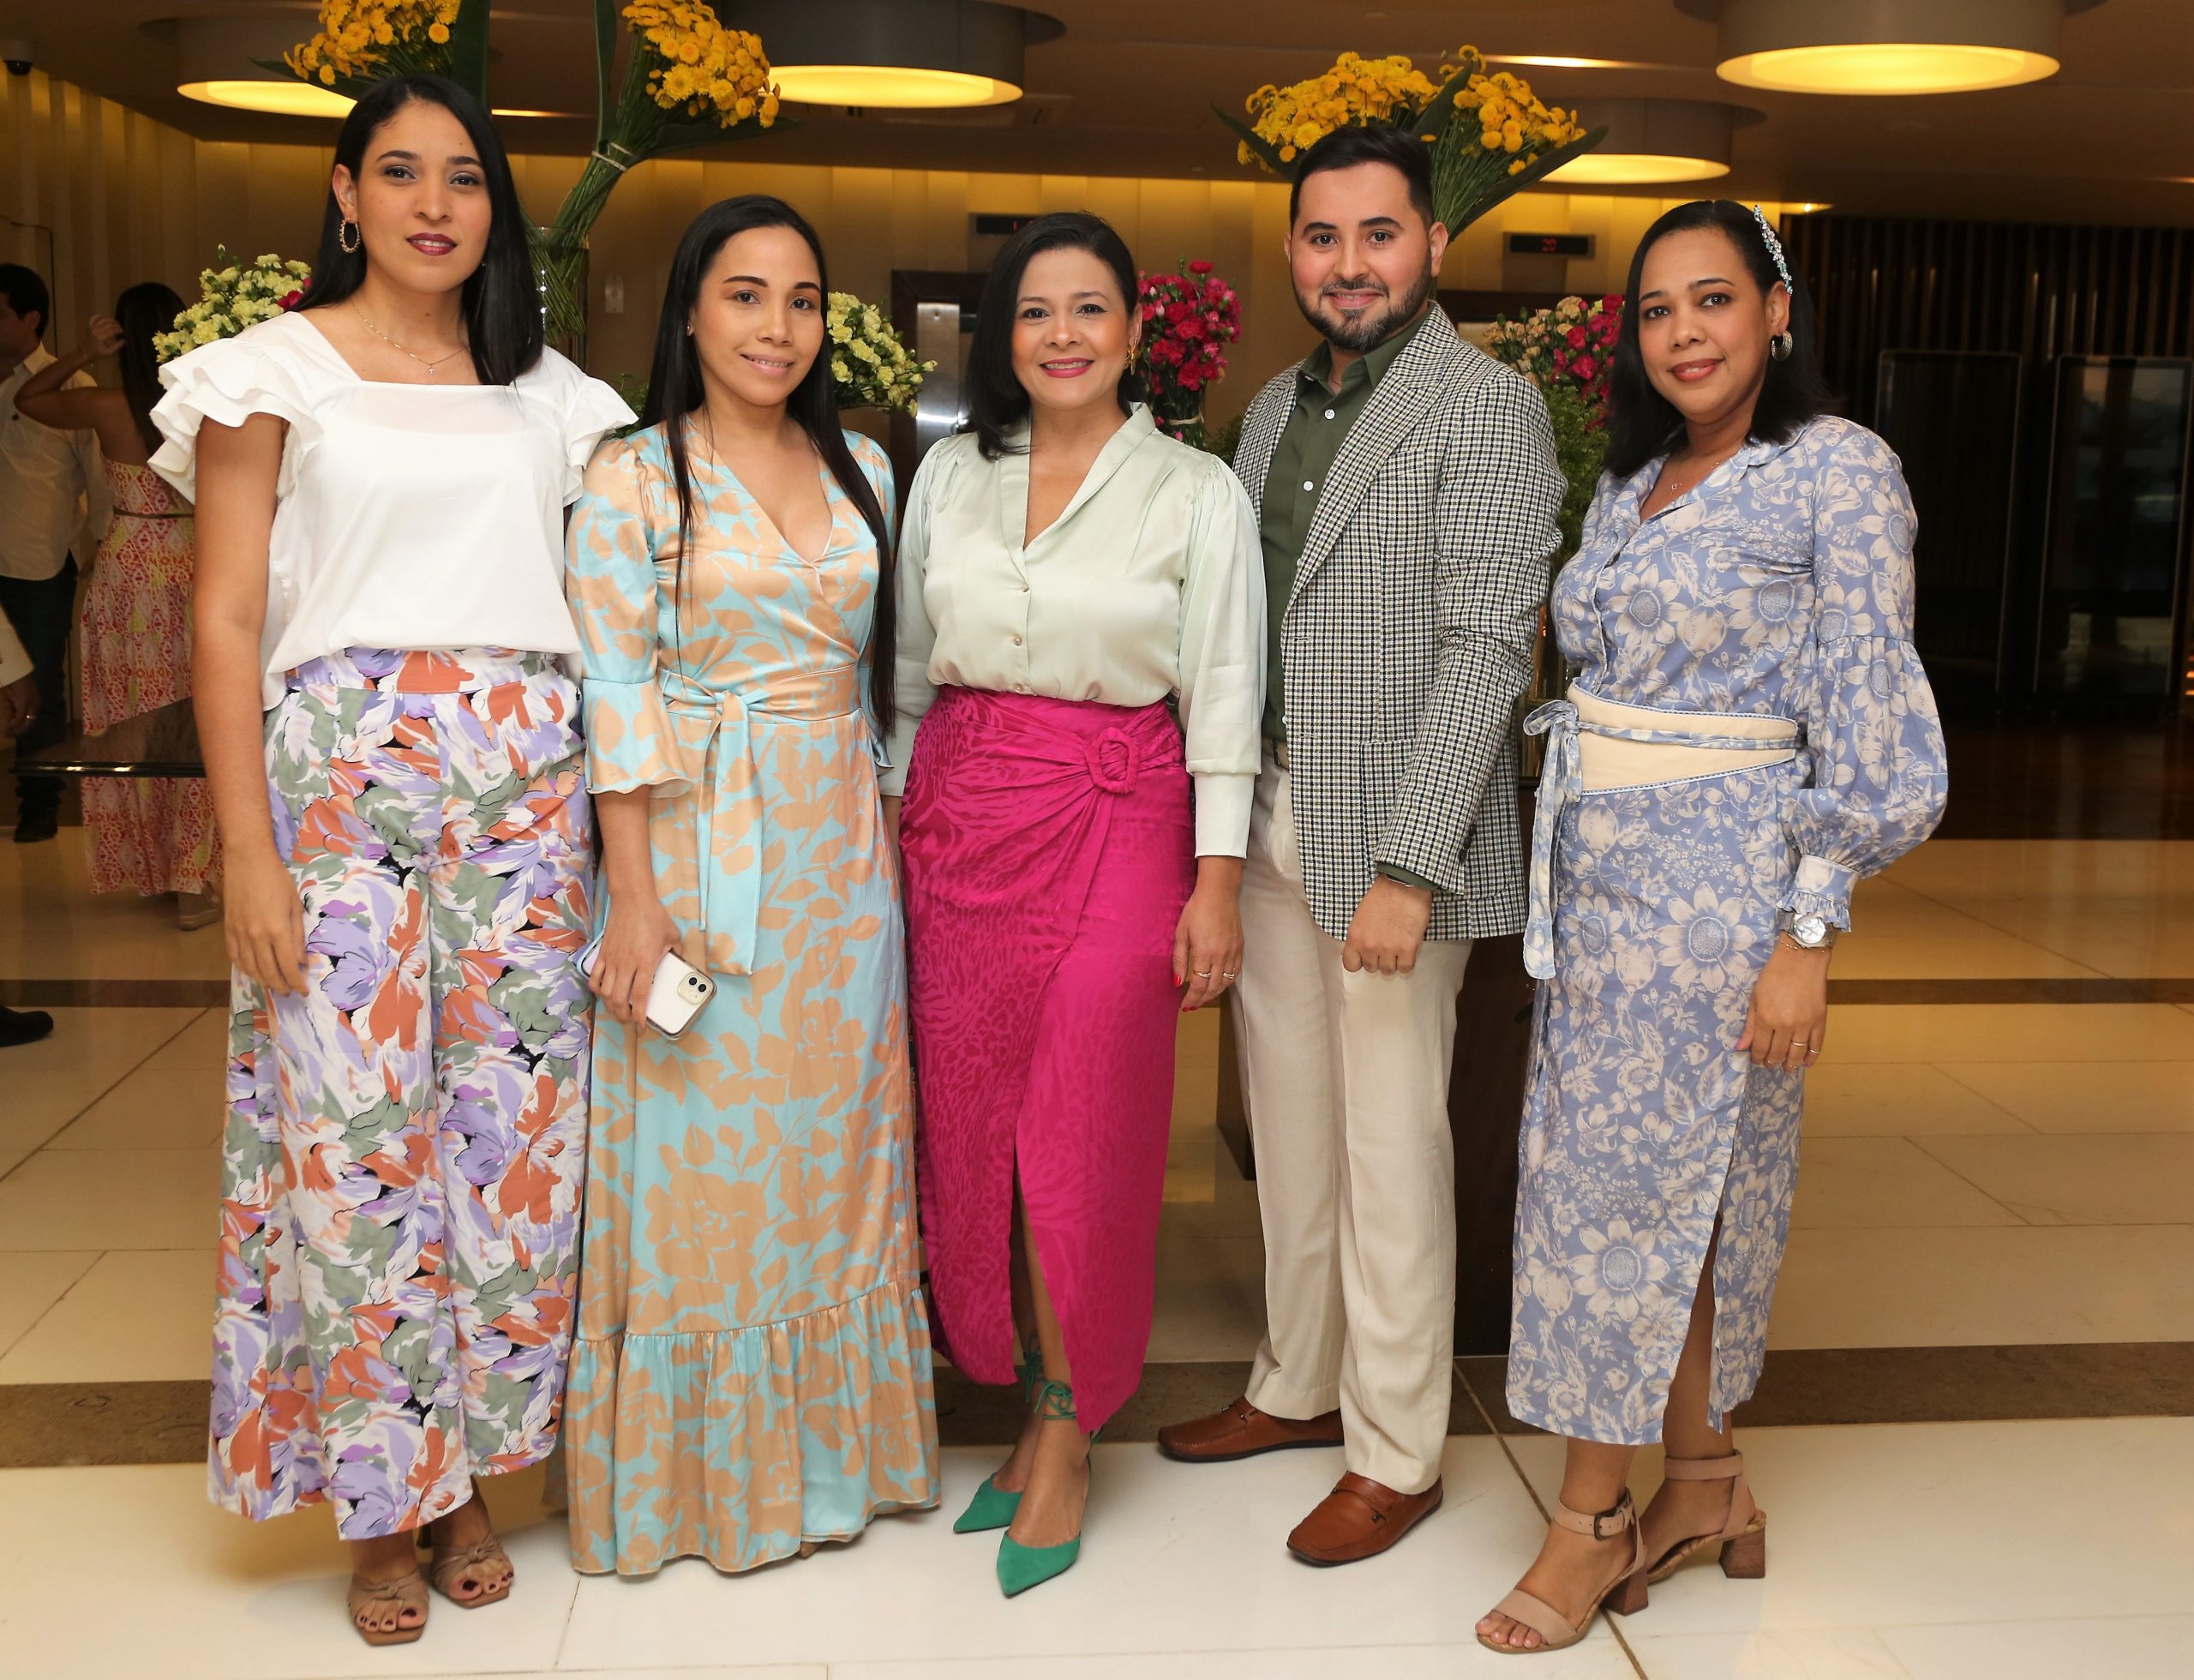 Paola Iriarte, Rosa Mendivil, Aurora Ochoa, Andrés Torrente, Maria Jose Acevedo